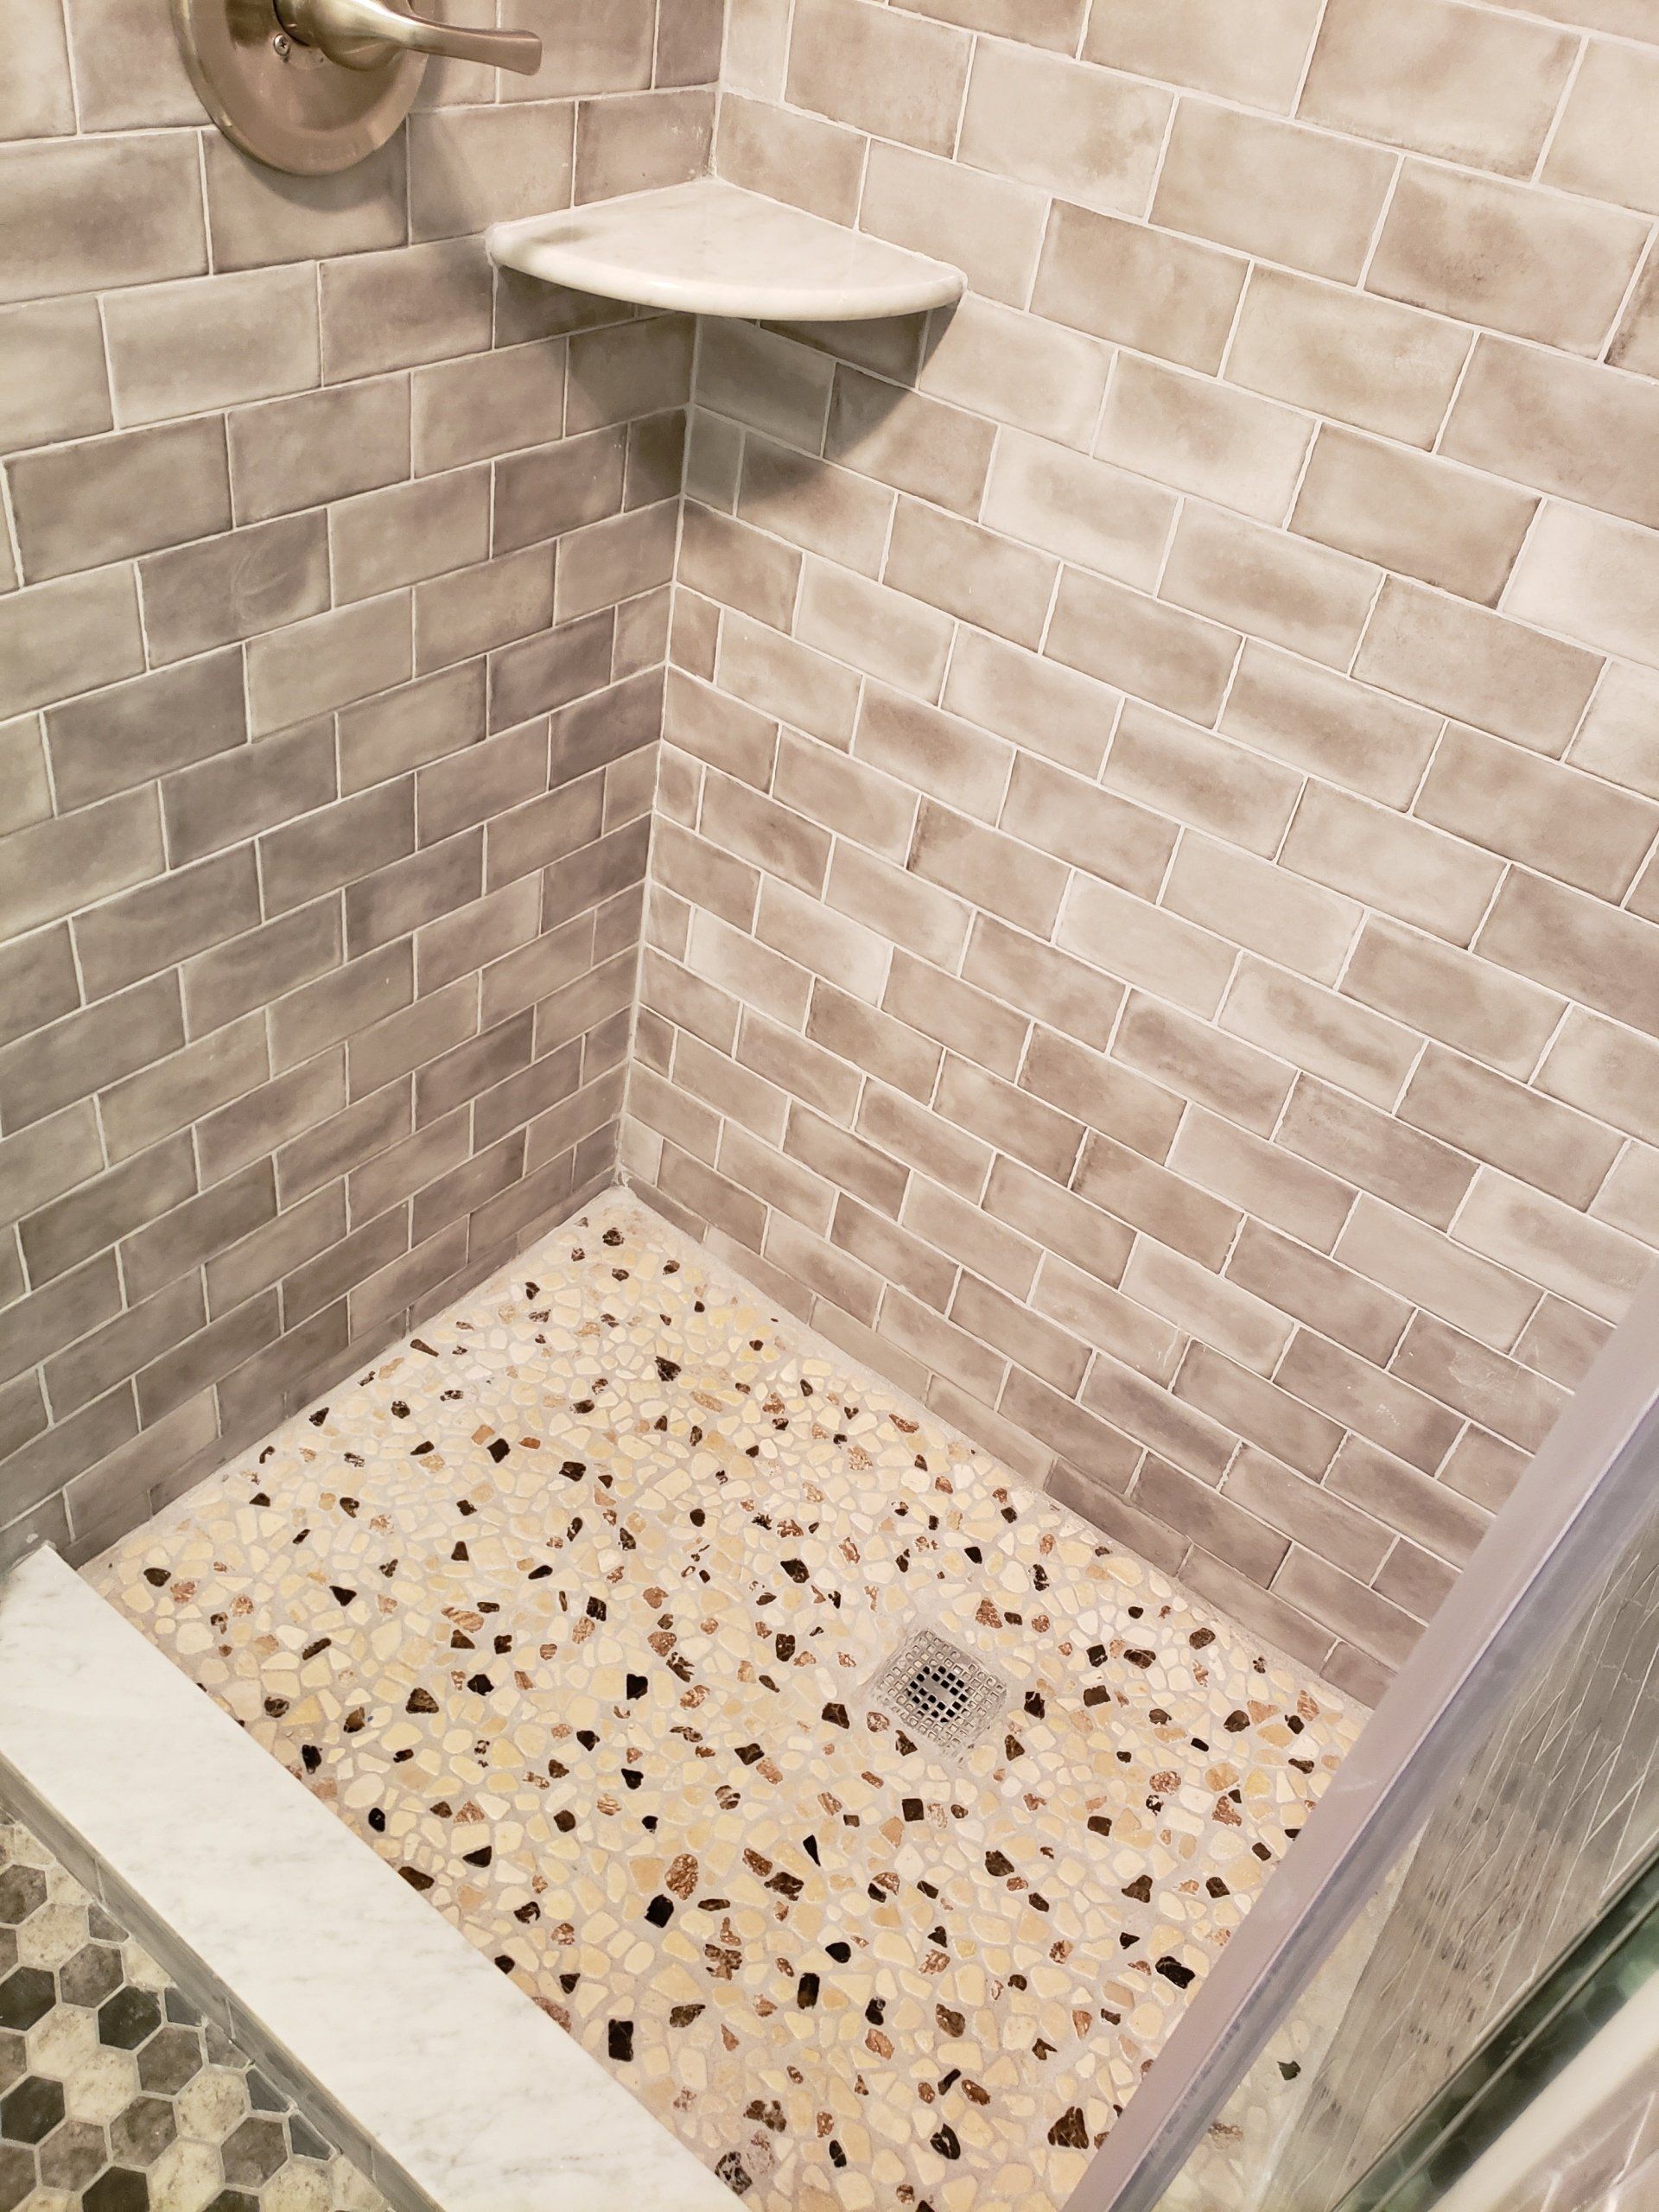 Jenkintown condo bathroom remodel close up of shower floor tiles and marble corner shelf.